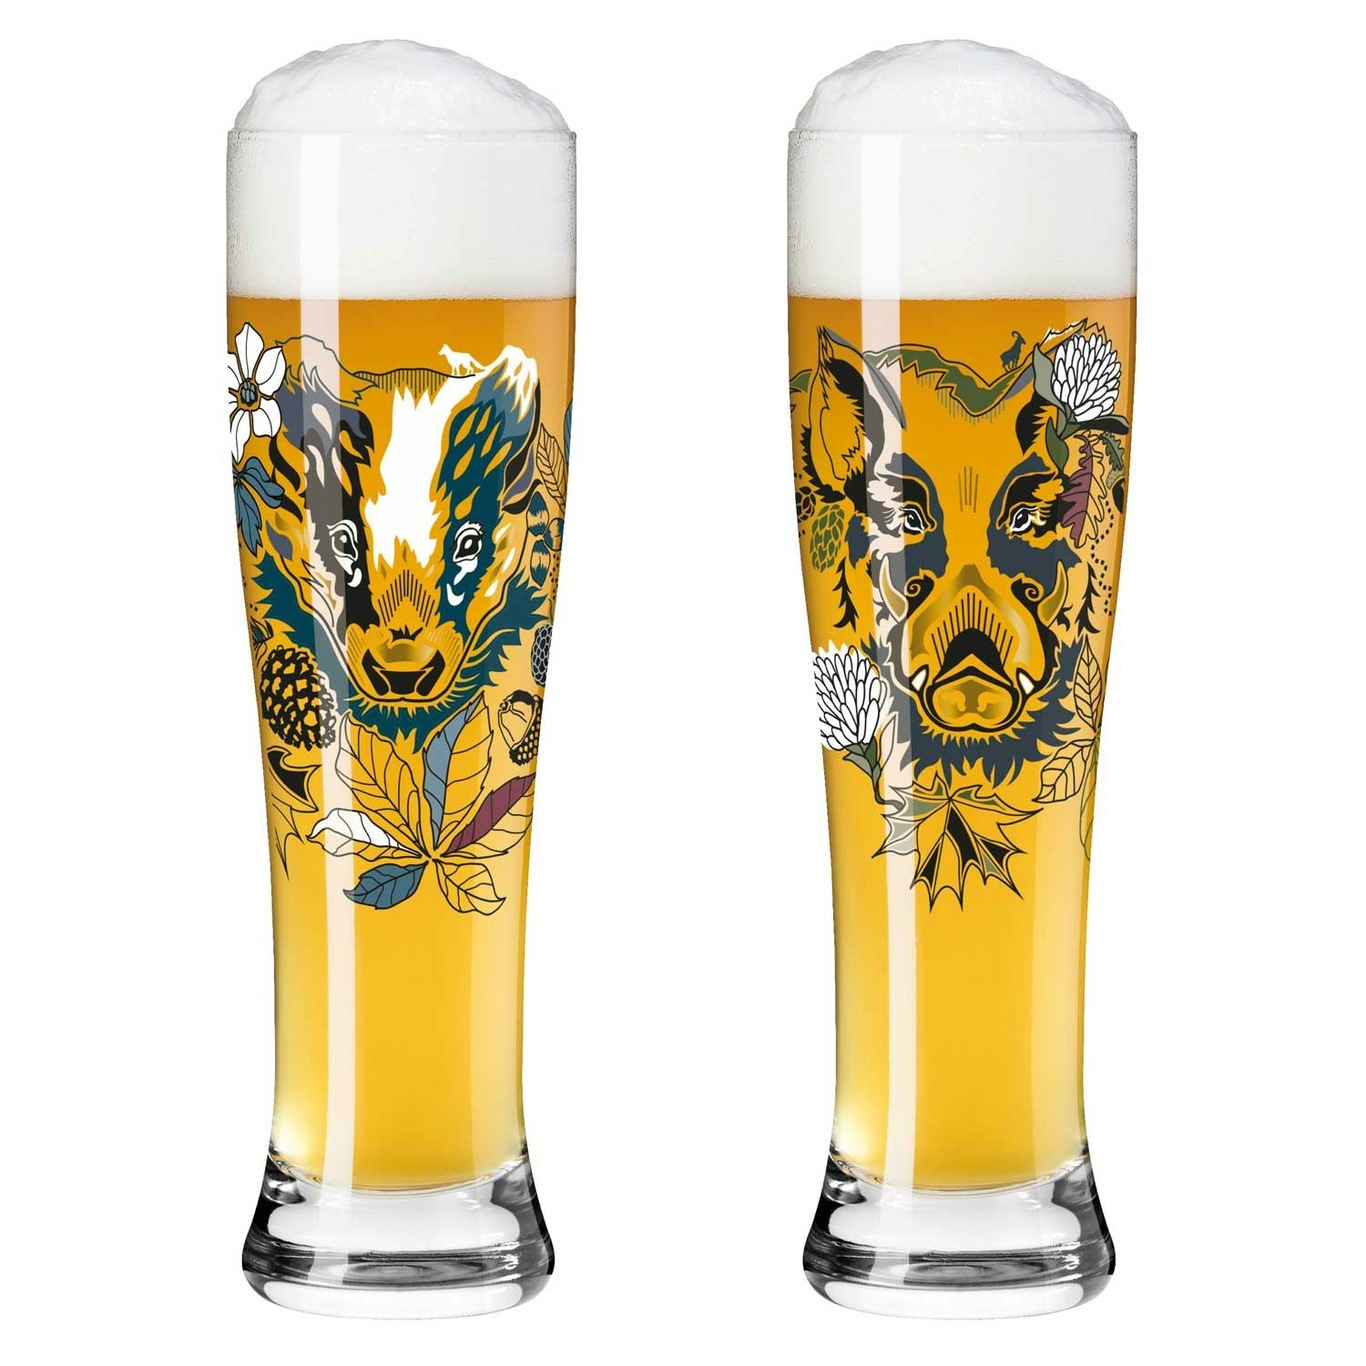 Brauchzeit Beer Glasses 2-pack, #7 & 8